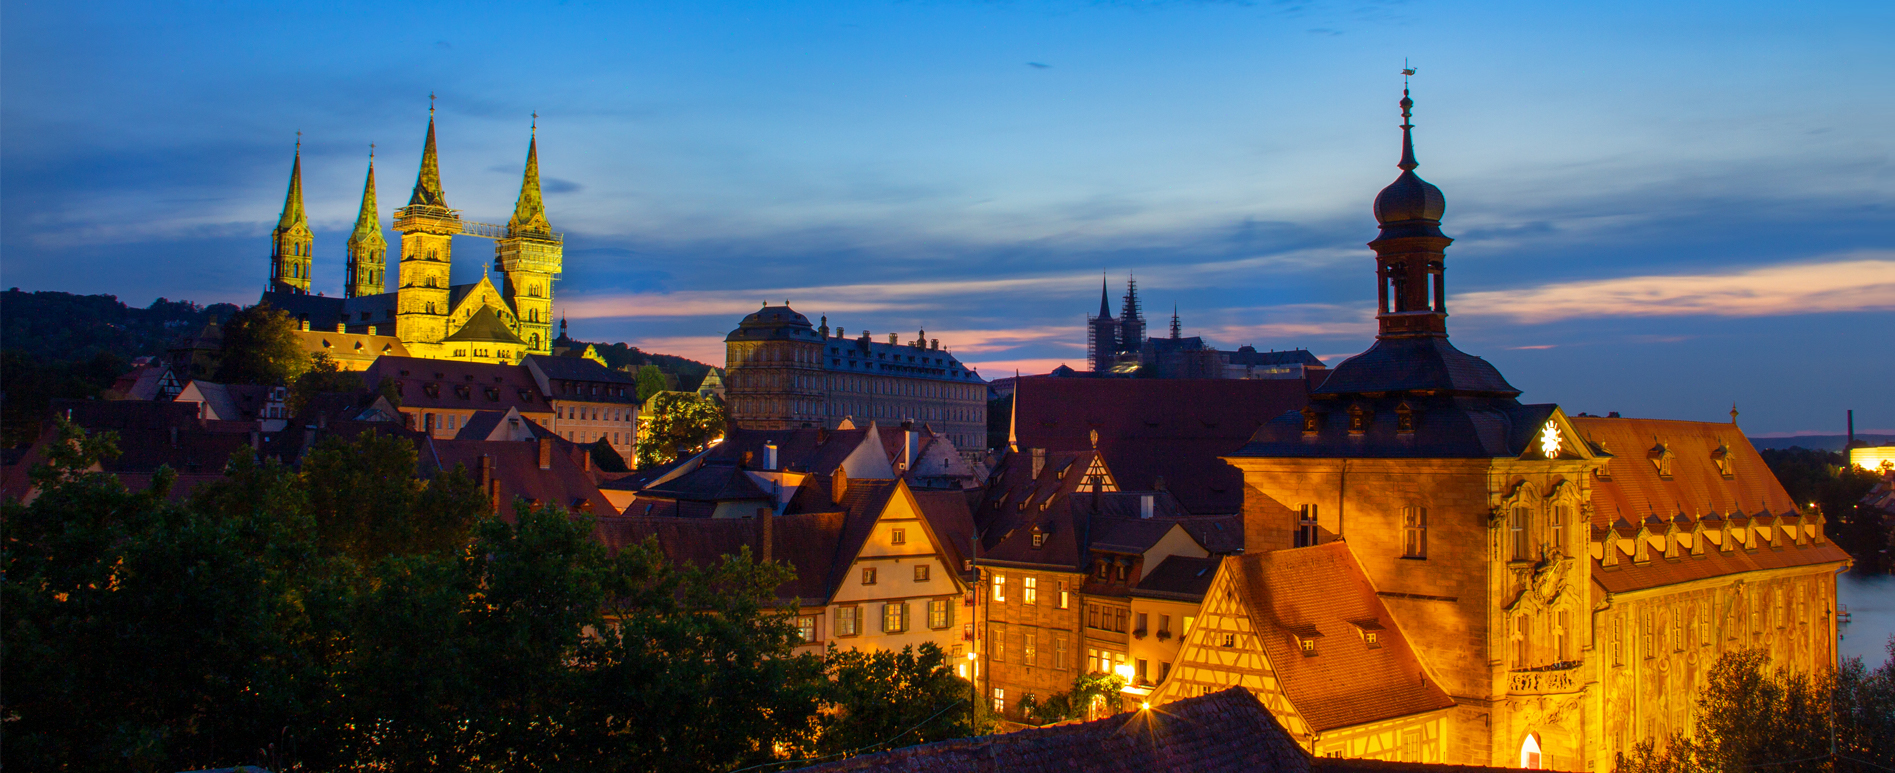 Bamberg-blaue-Stunde-Startslider